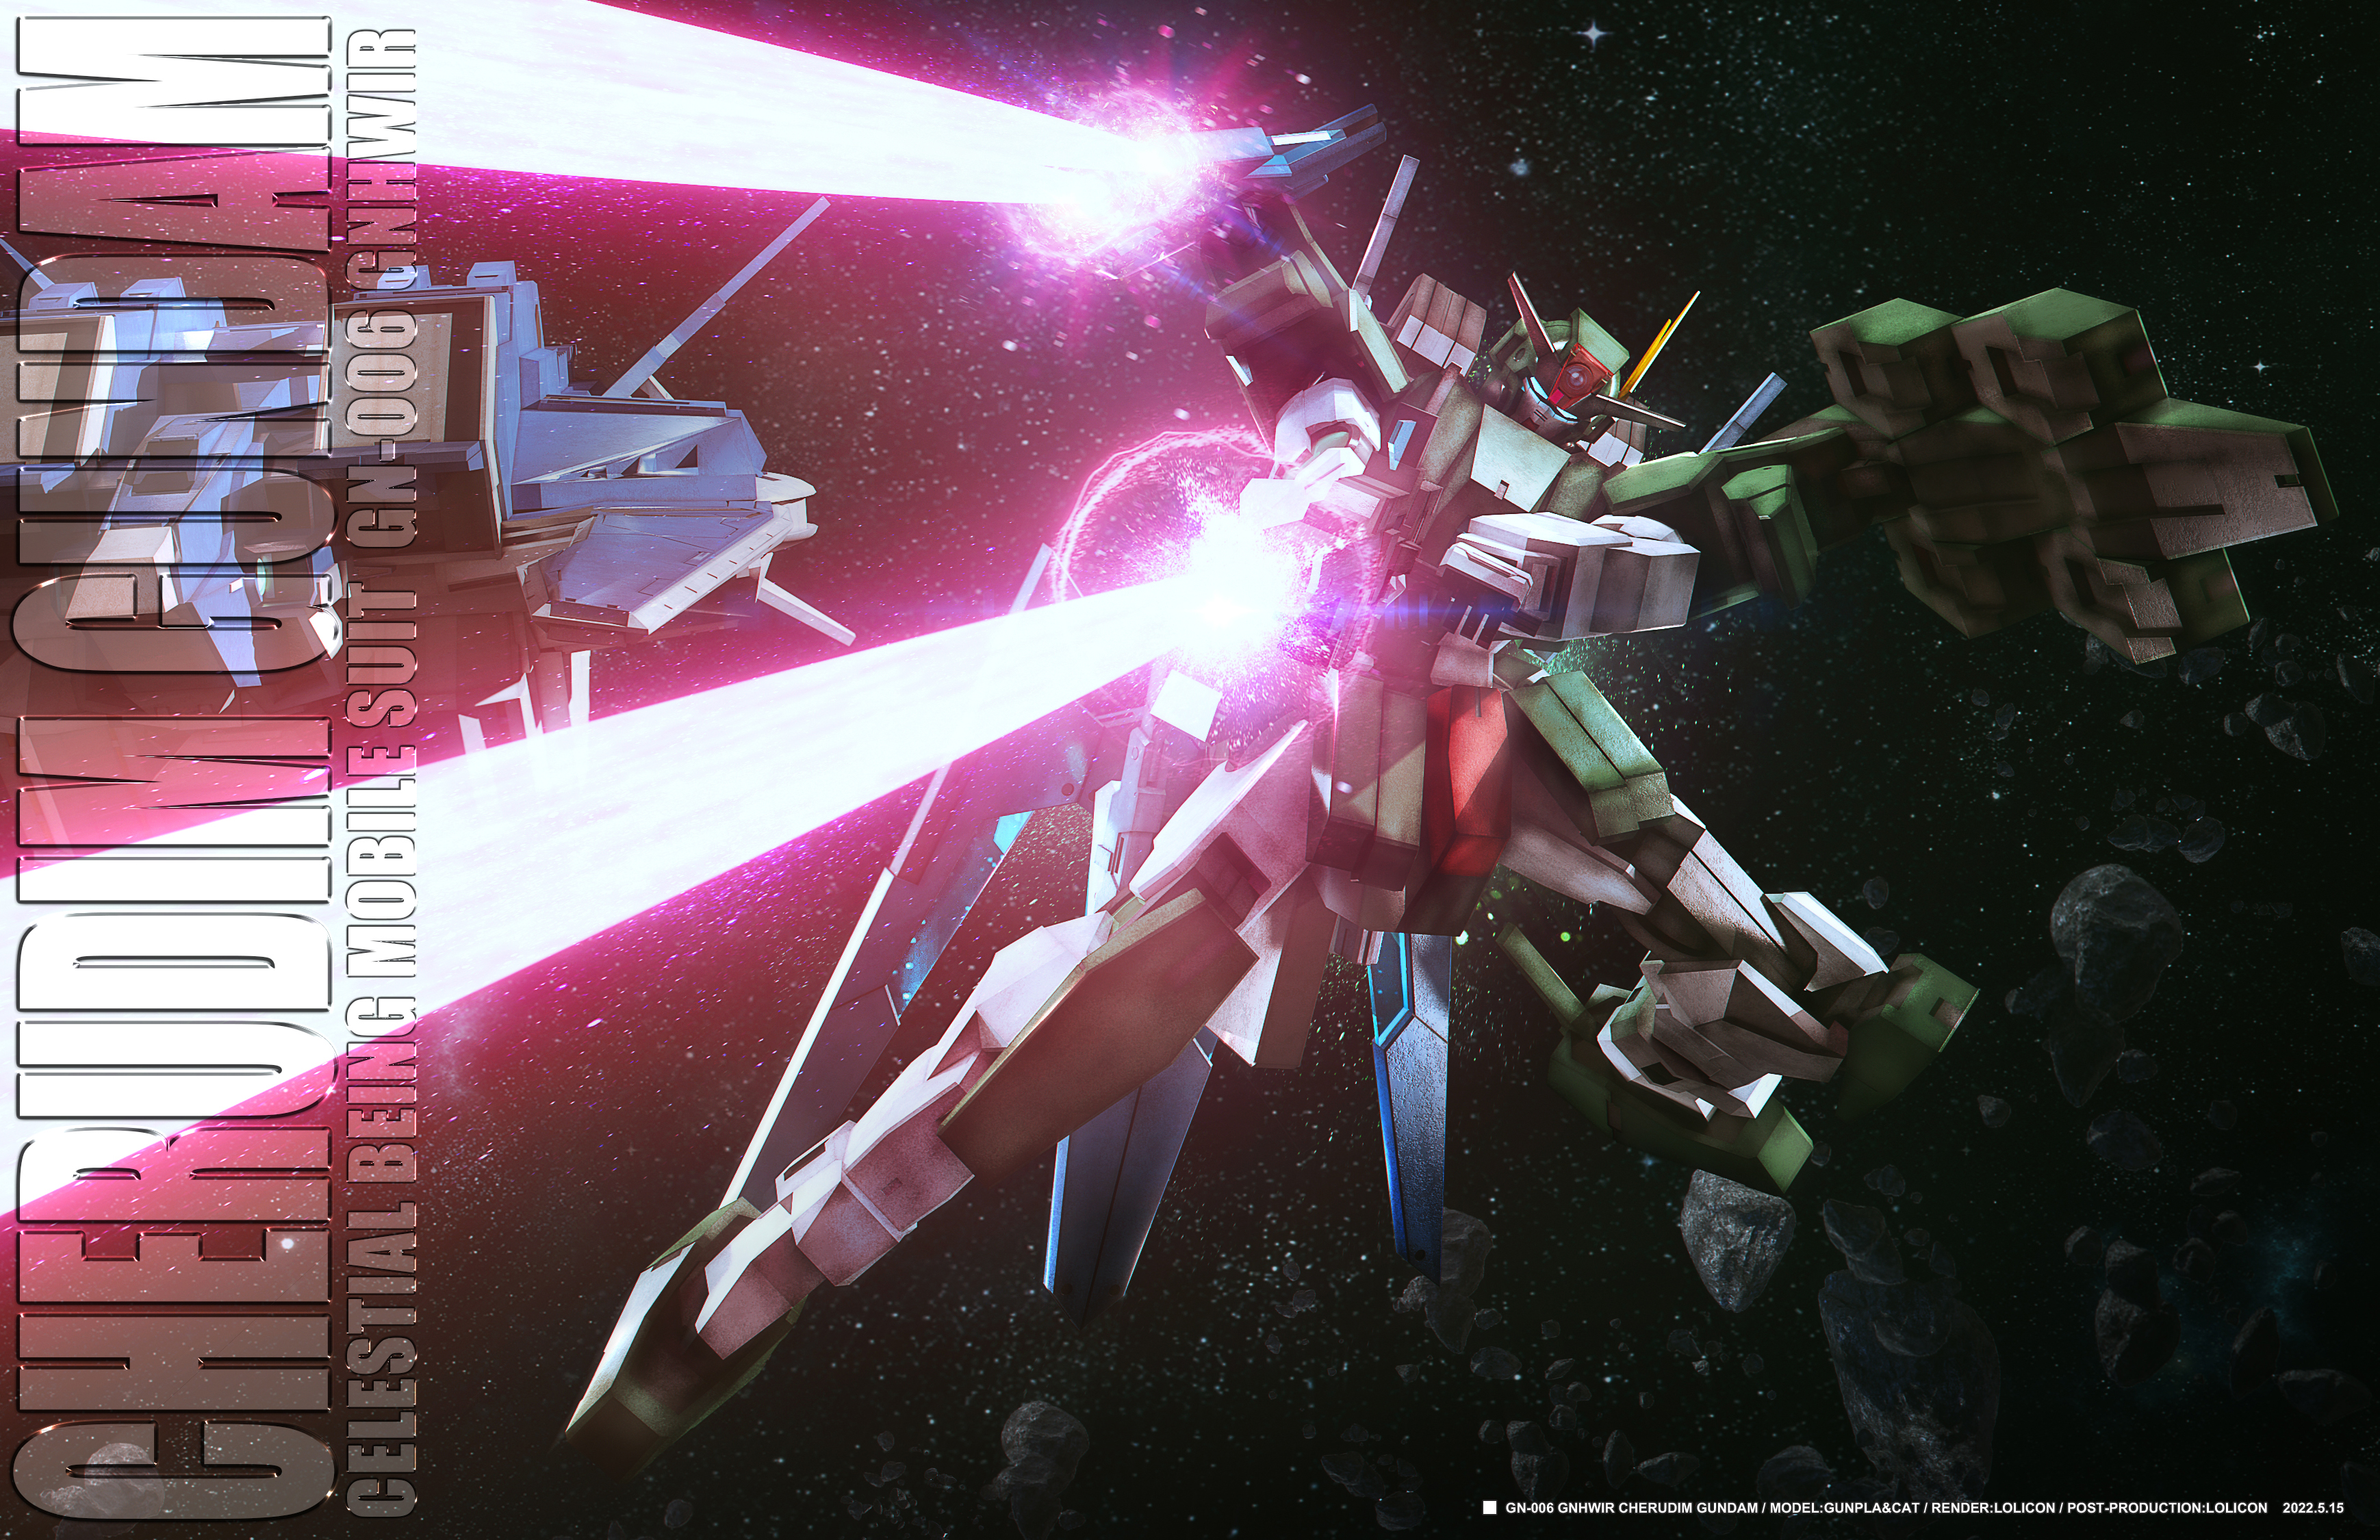 Anime 3477x2250 Cherudim Gundam anime mechs Gundam Mobile Suit Gundam 00 Super Robot Taisen artwork digital art fan art